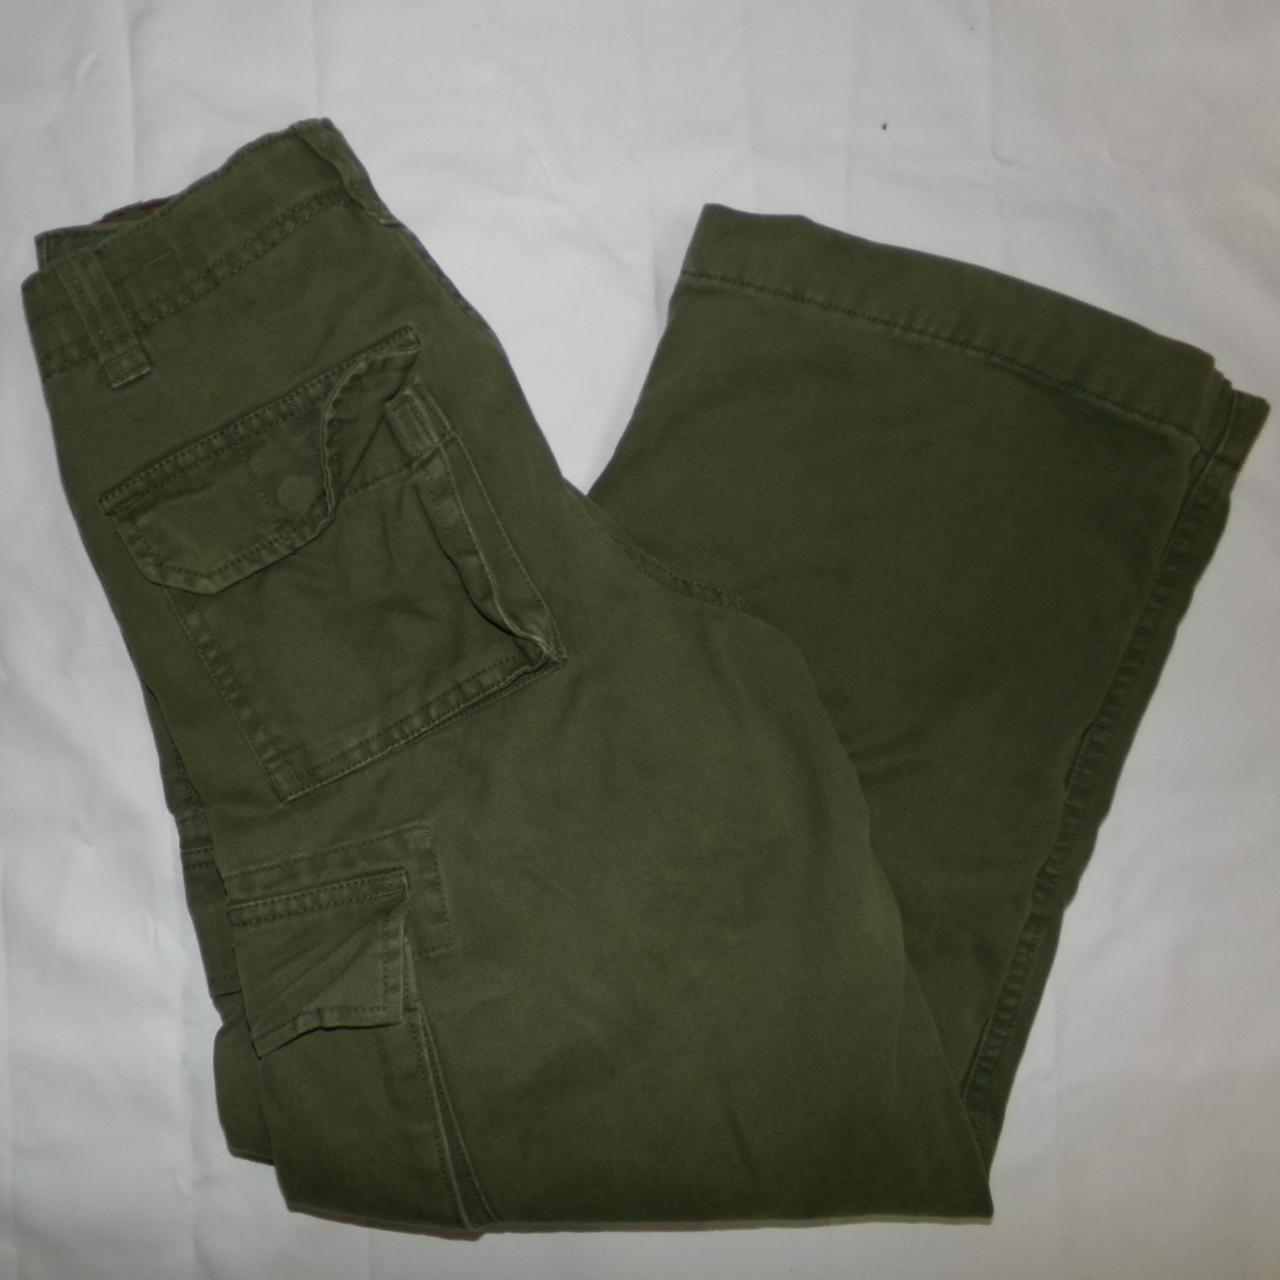 Vintage 2000s Gap Cargo flannel lined pants -very... - Depop